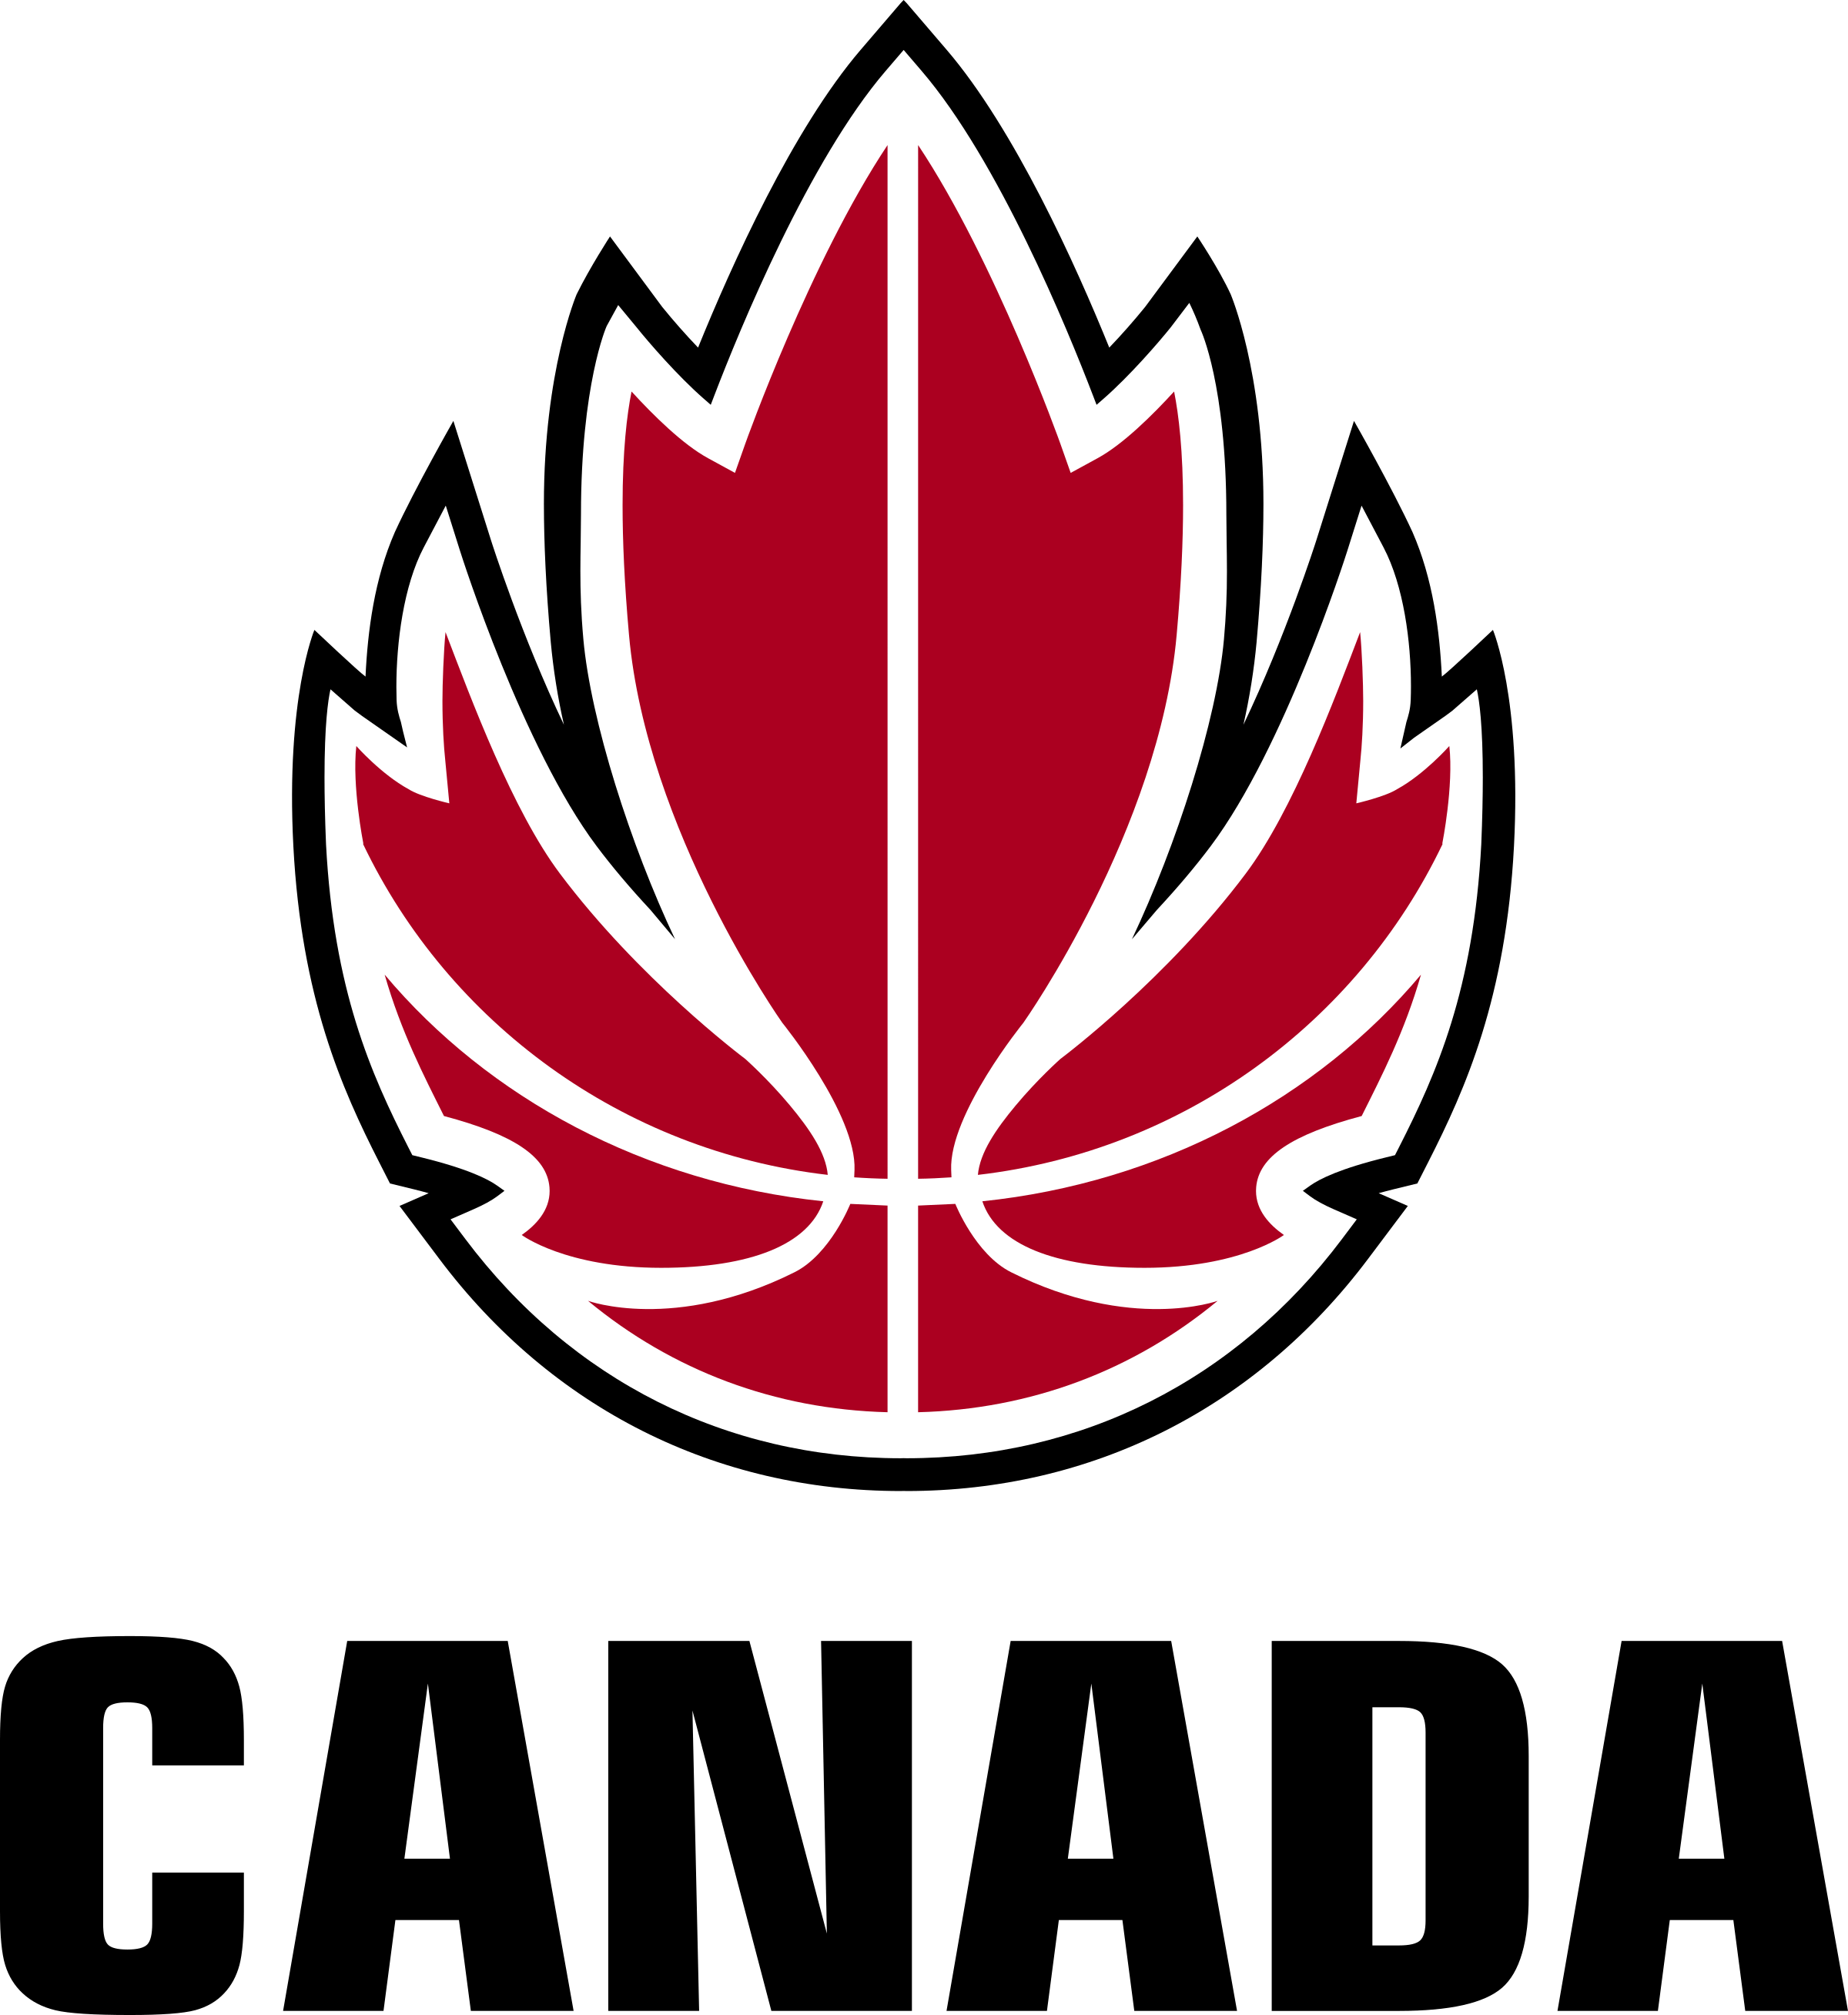 Transparent Basketball Logo - Canadian Basketball Logo PNG Transparent & SVG Vector